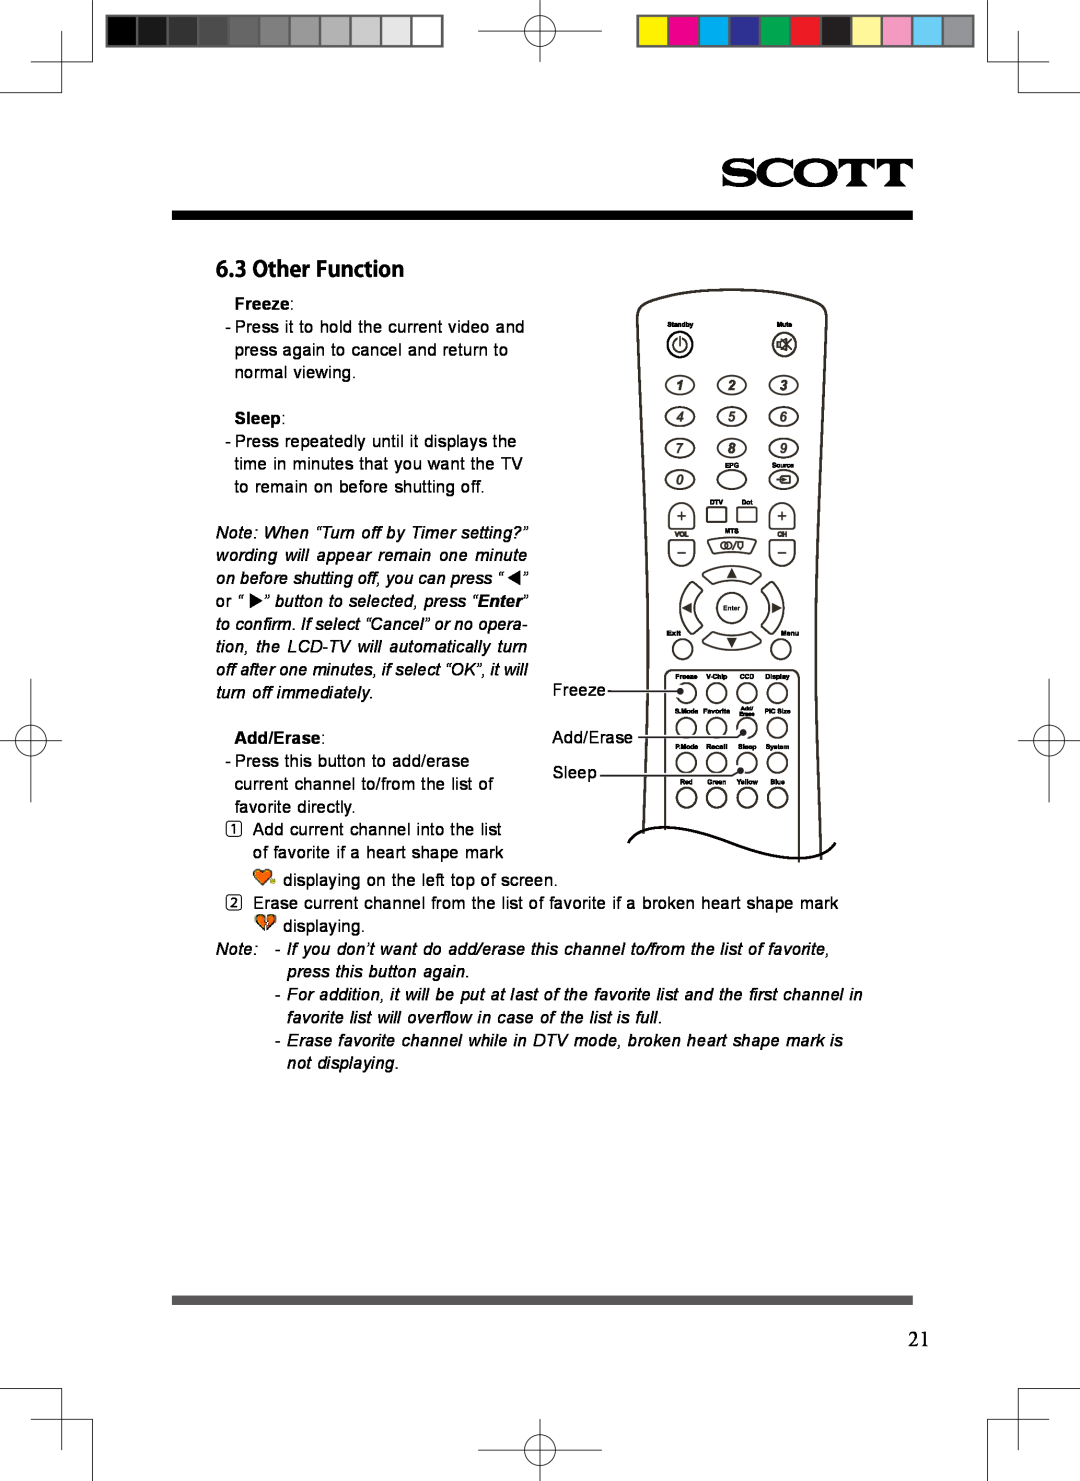 Scott LCT37SHA manual Other Function, Freeze, Sleep, Add/Erase 